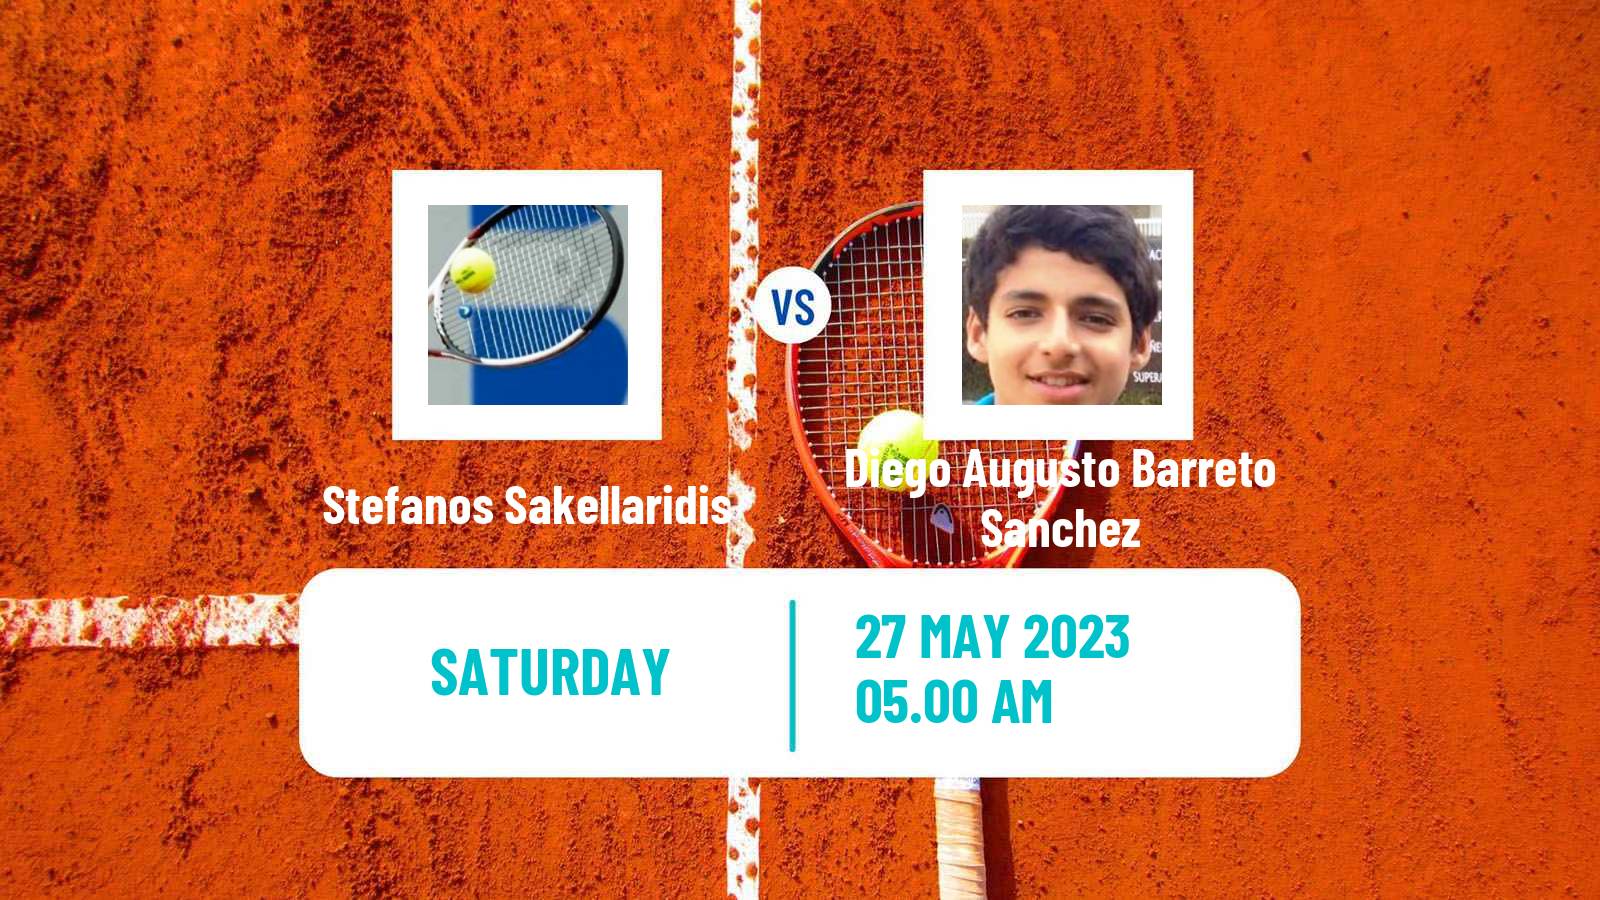 Tennis ITF M25 Mataro Men Stefanos Sakellaridis - Diego Augusto Barreto Sanchez